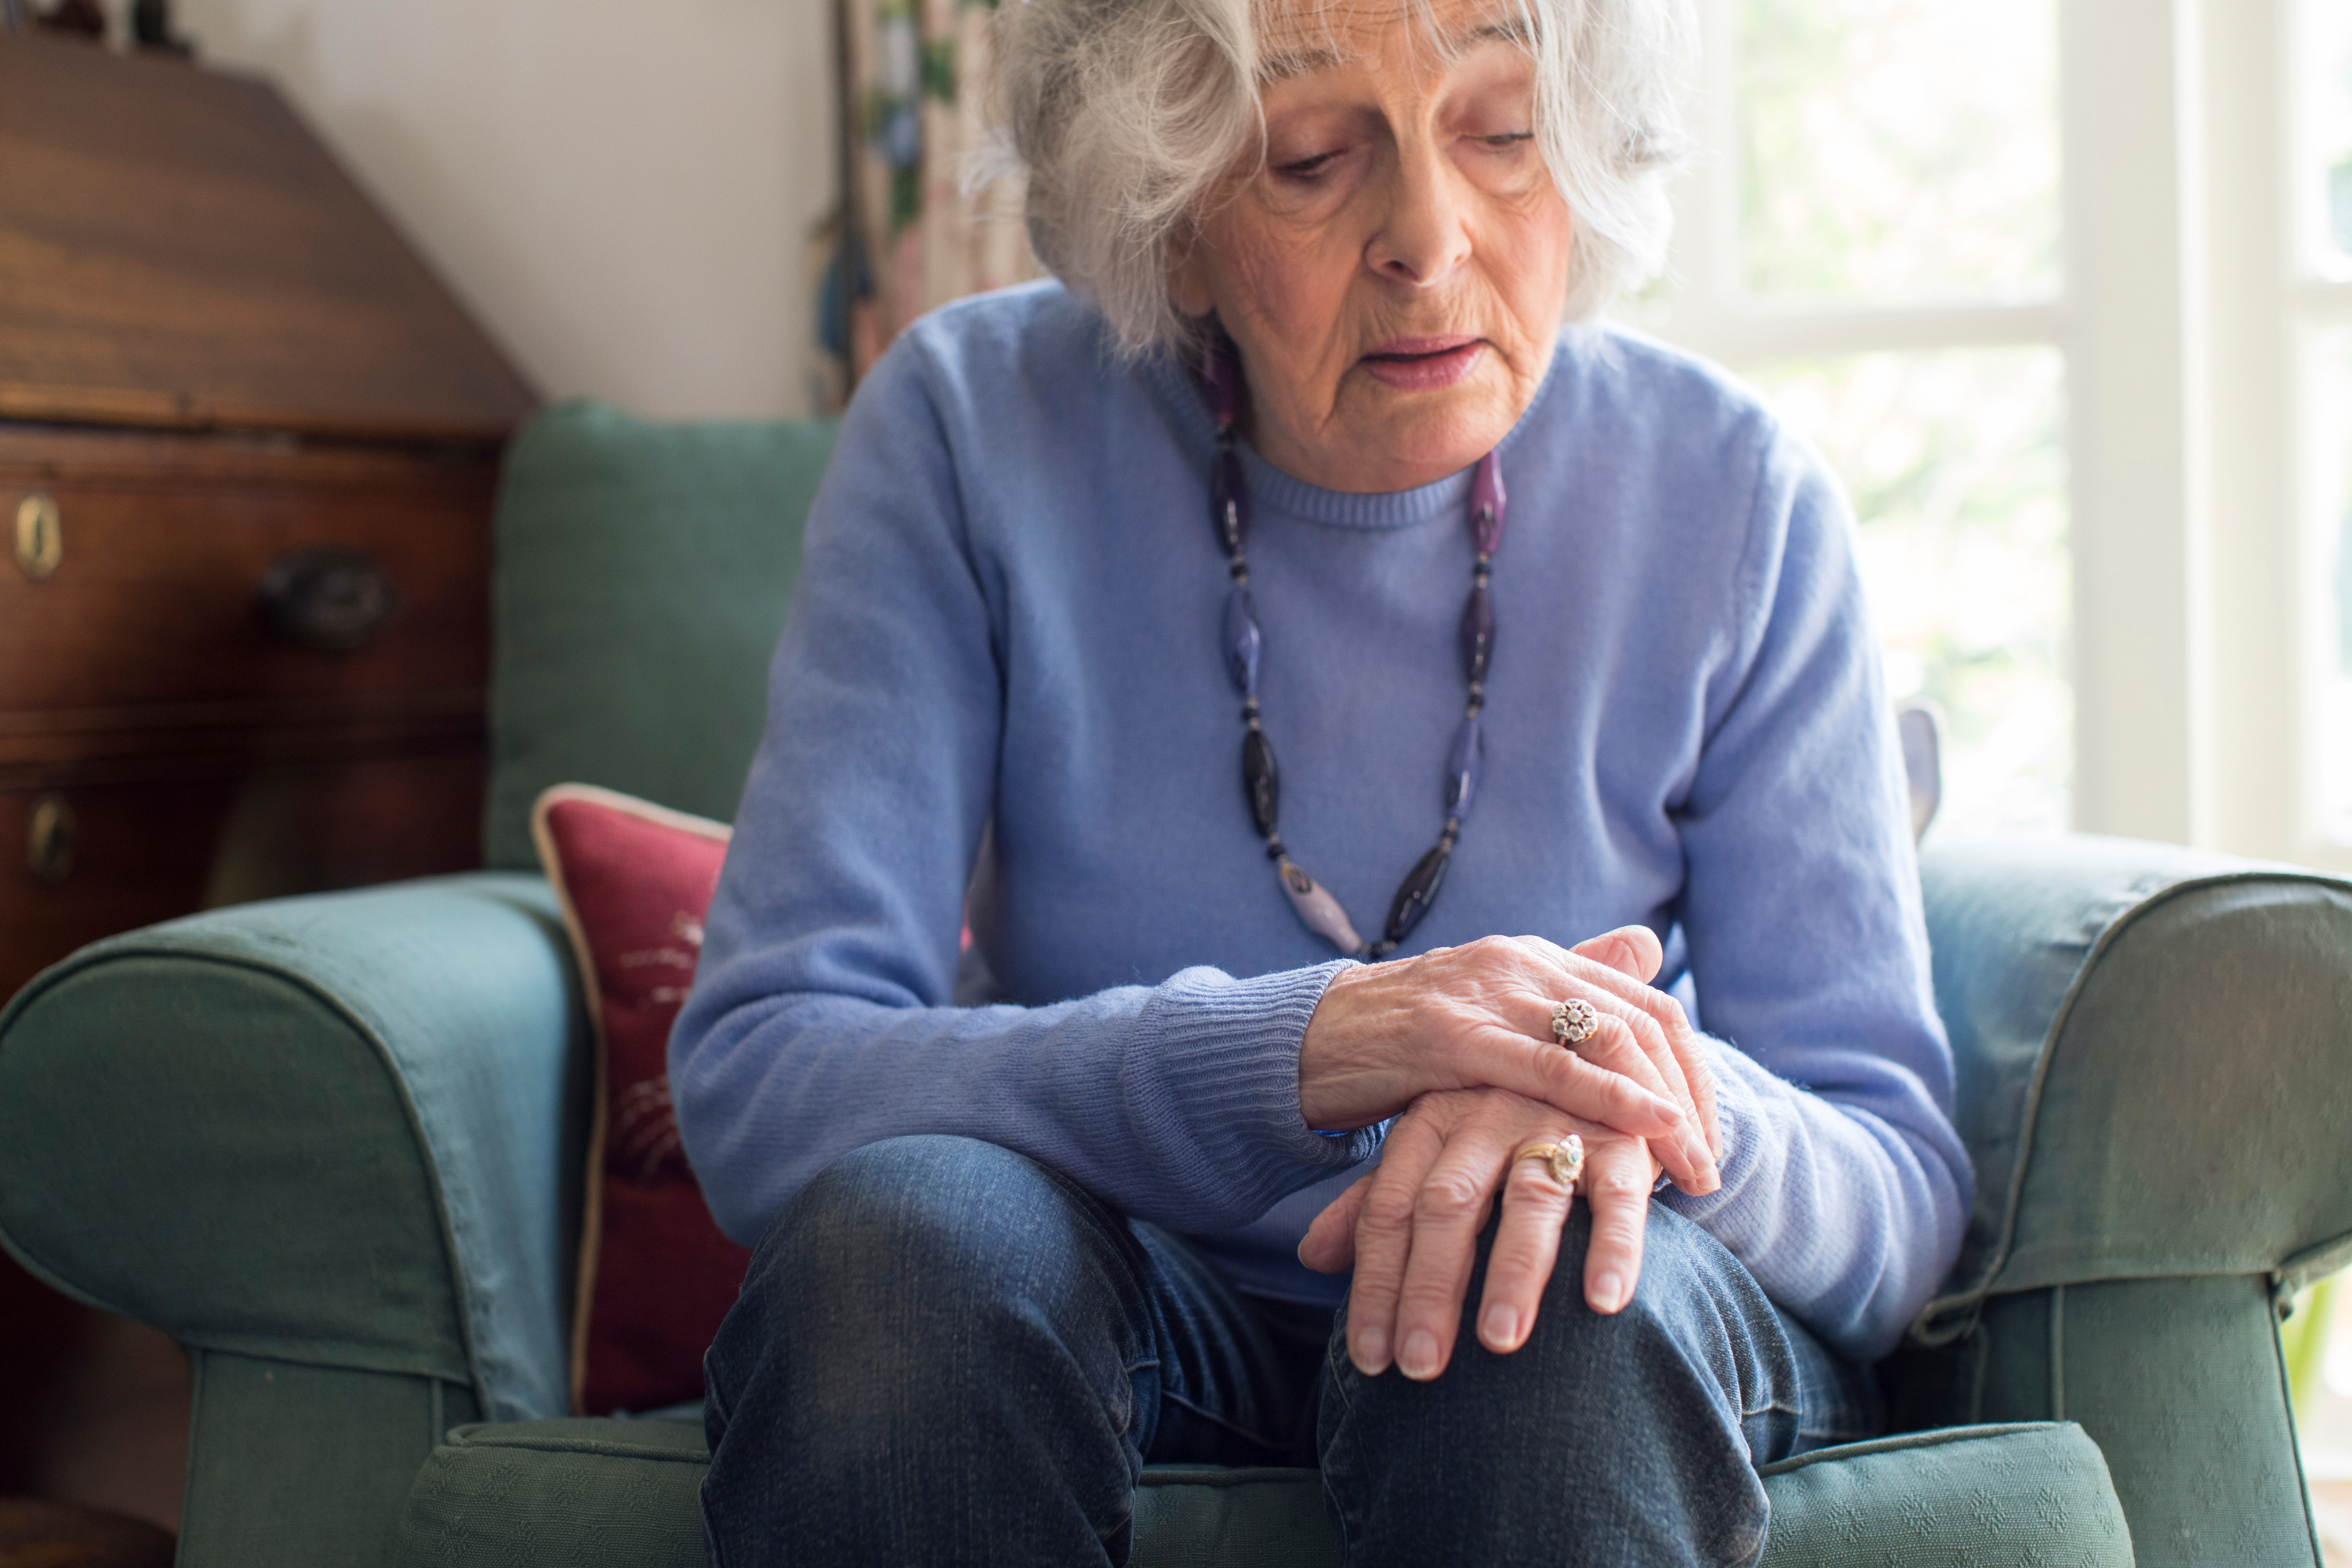 Elderly women with Parkinson's disease